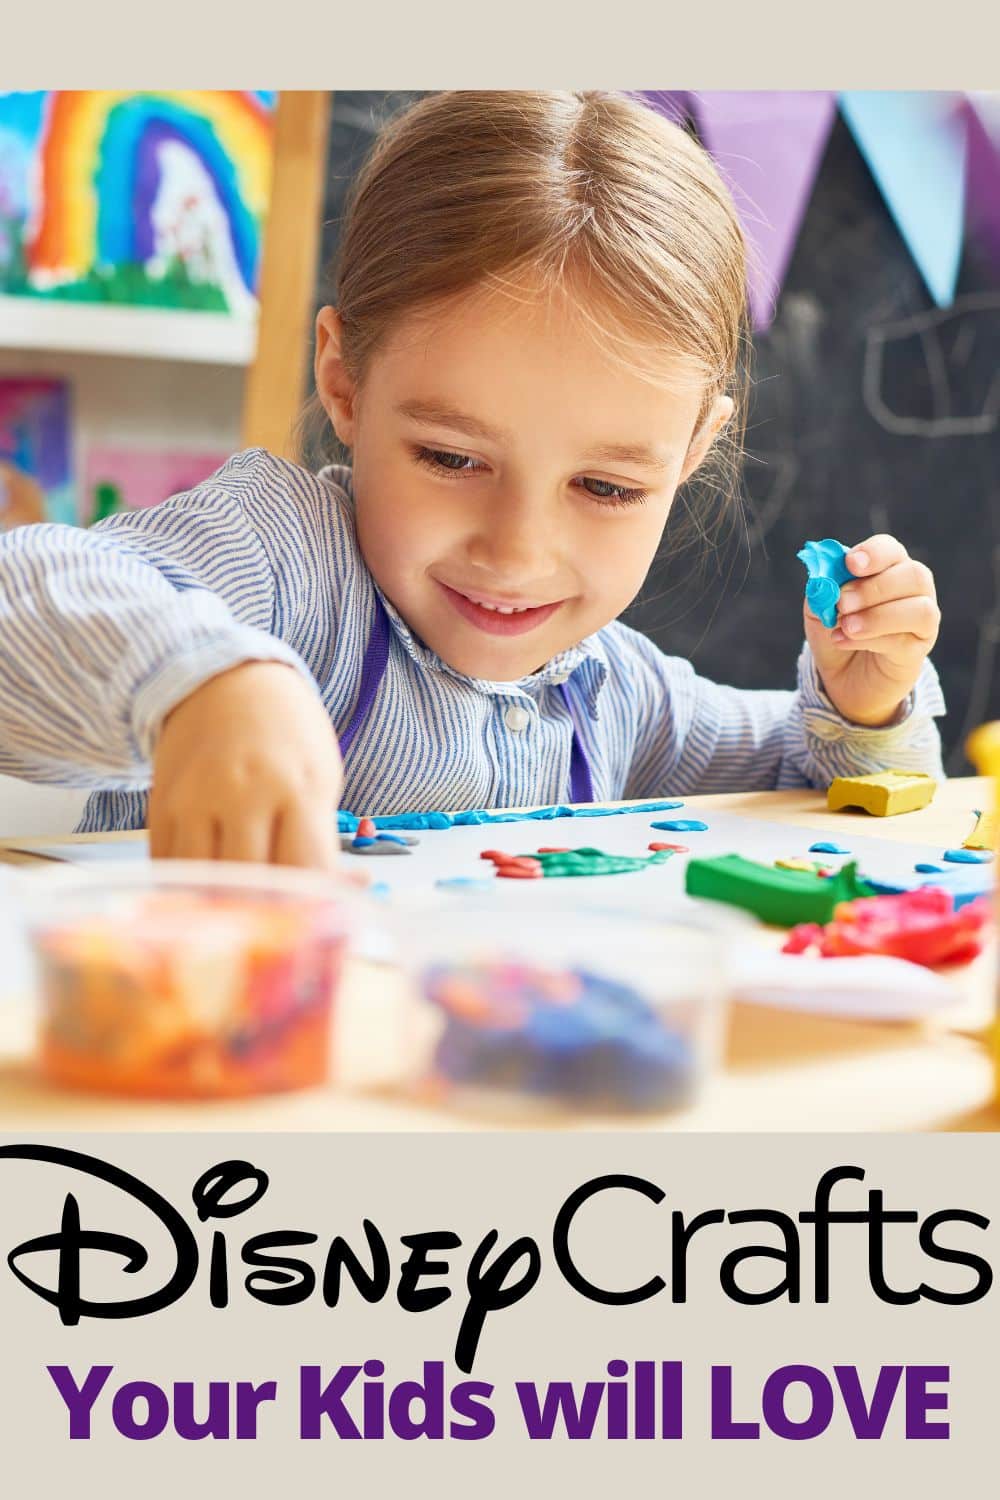 Disney Crafts Your Kids will Love